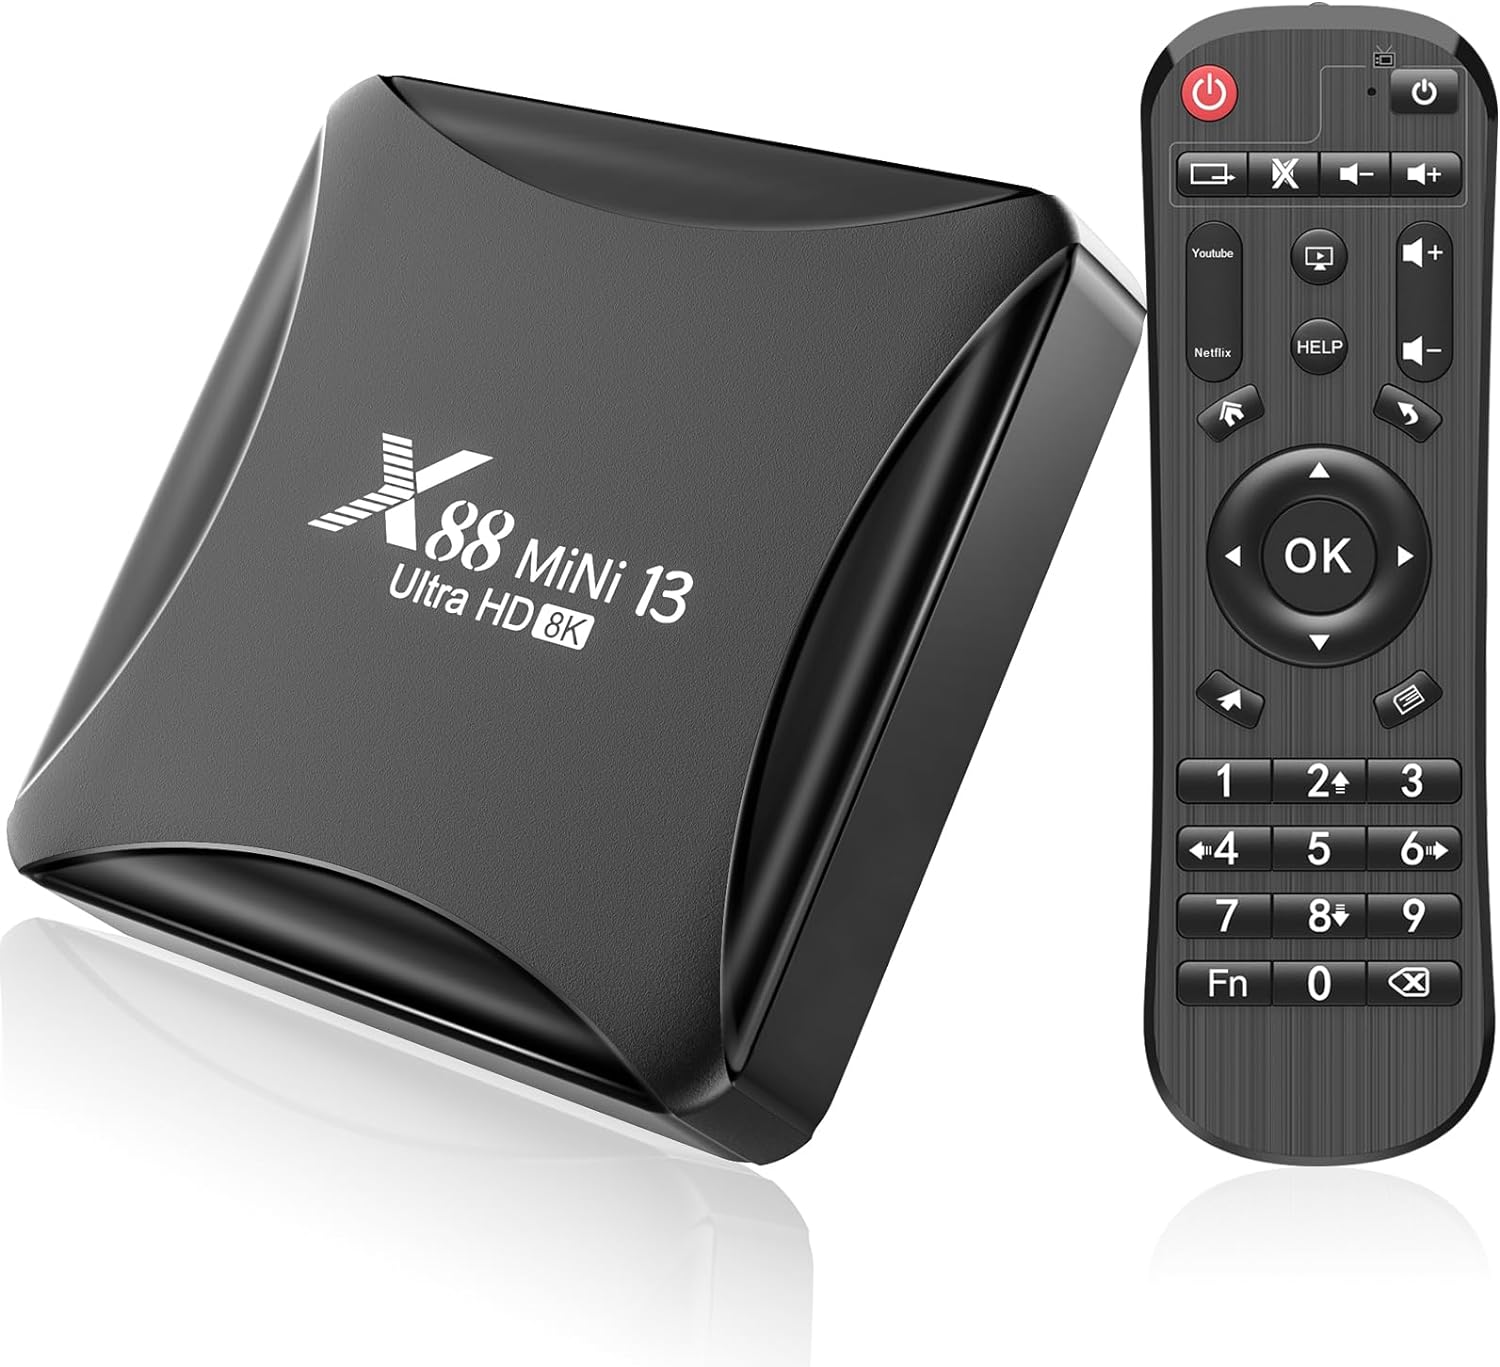 Android TV Box 13.0, X13 Mini 4GB RAM 32GB ROM RK3528 Quad-Core 64bit Cortex-A53 Support 2.4/5.0GHz Dual Band Wi-Fi 10/100M Ethernet HDMI 2.0 Smart TV Box